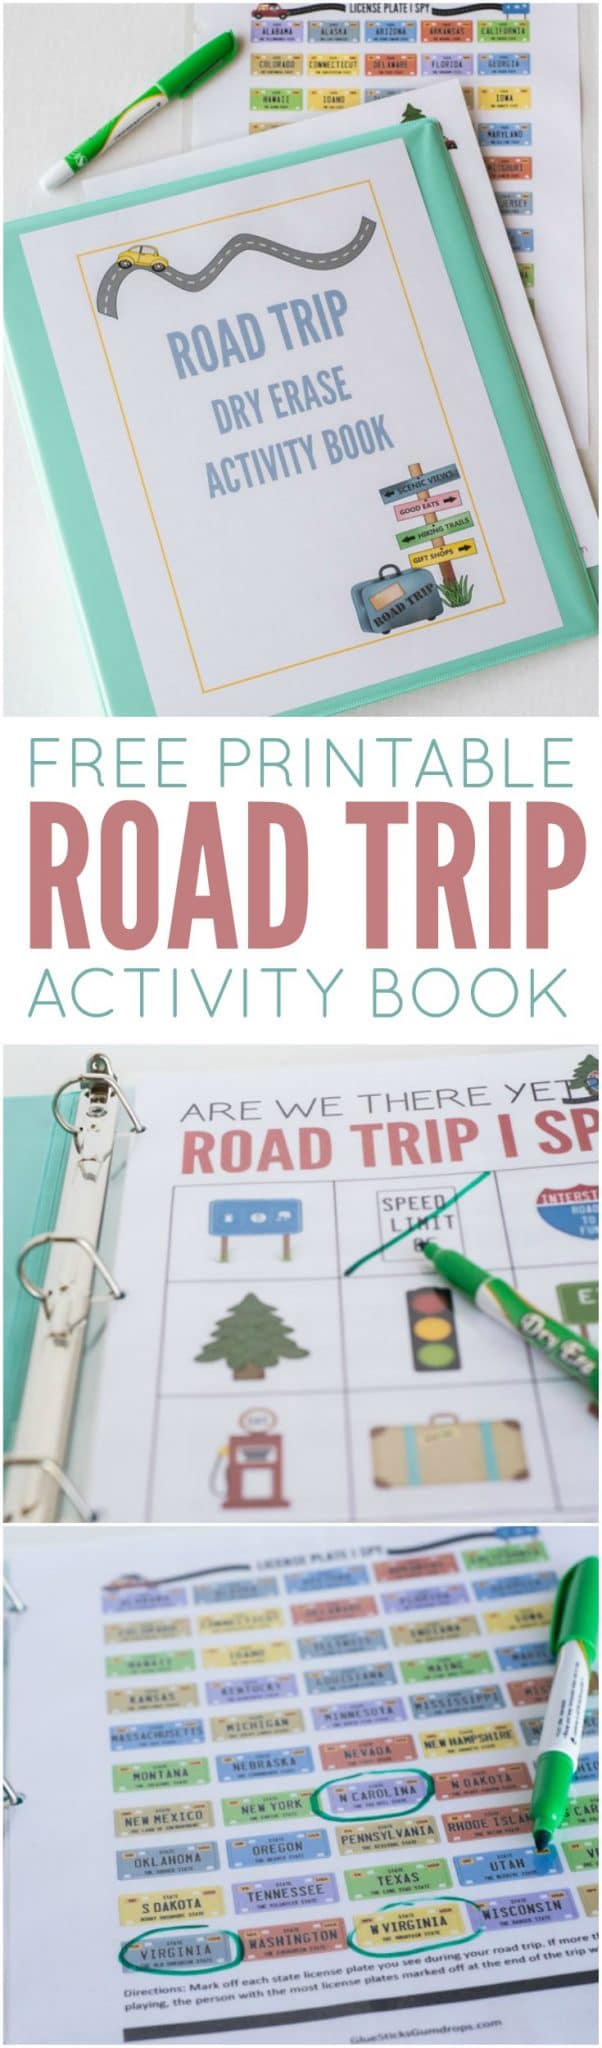 road trip activity book pdf